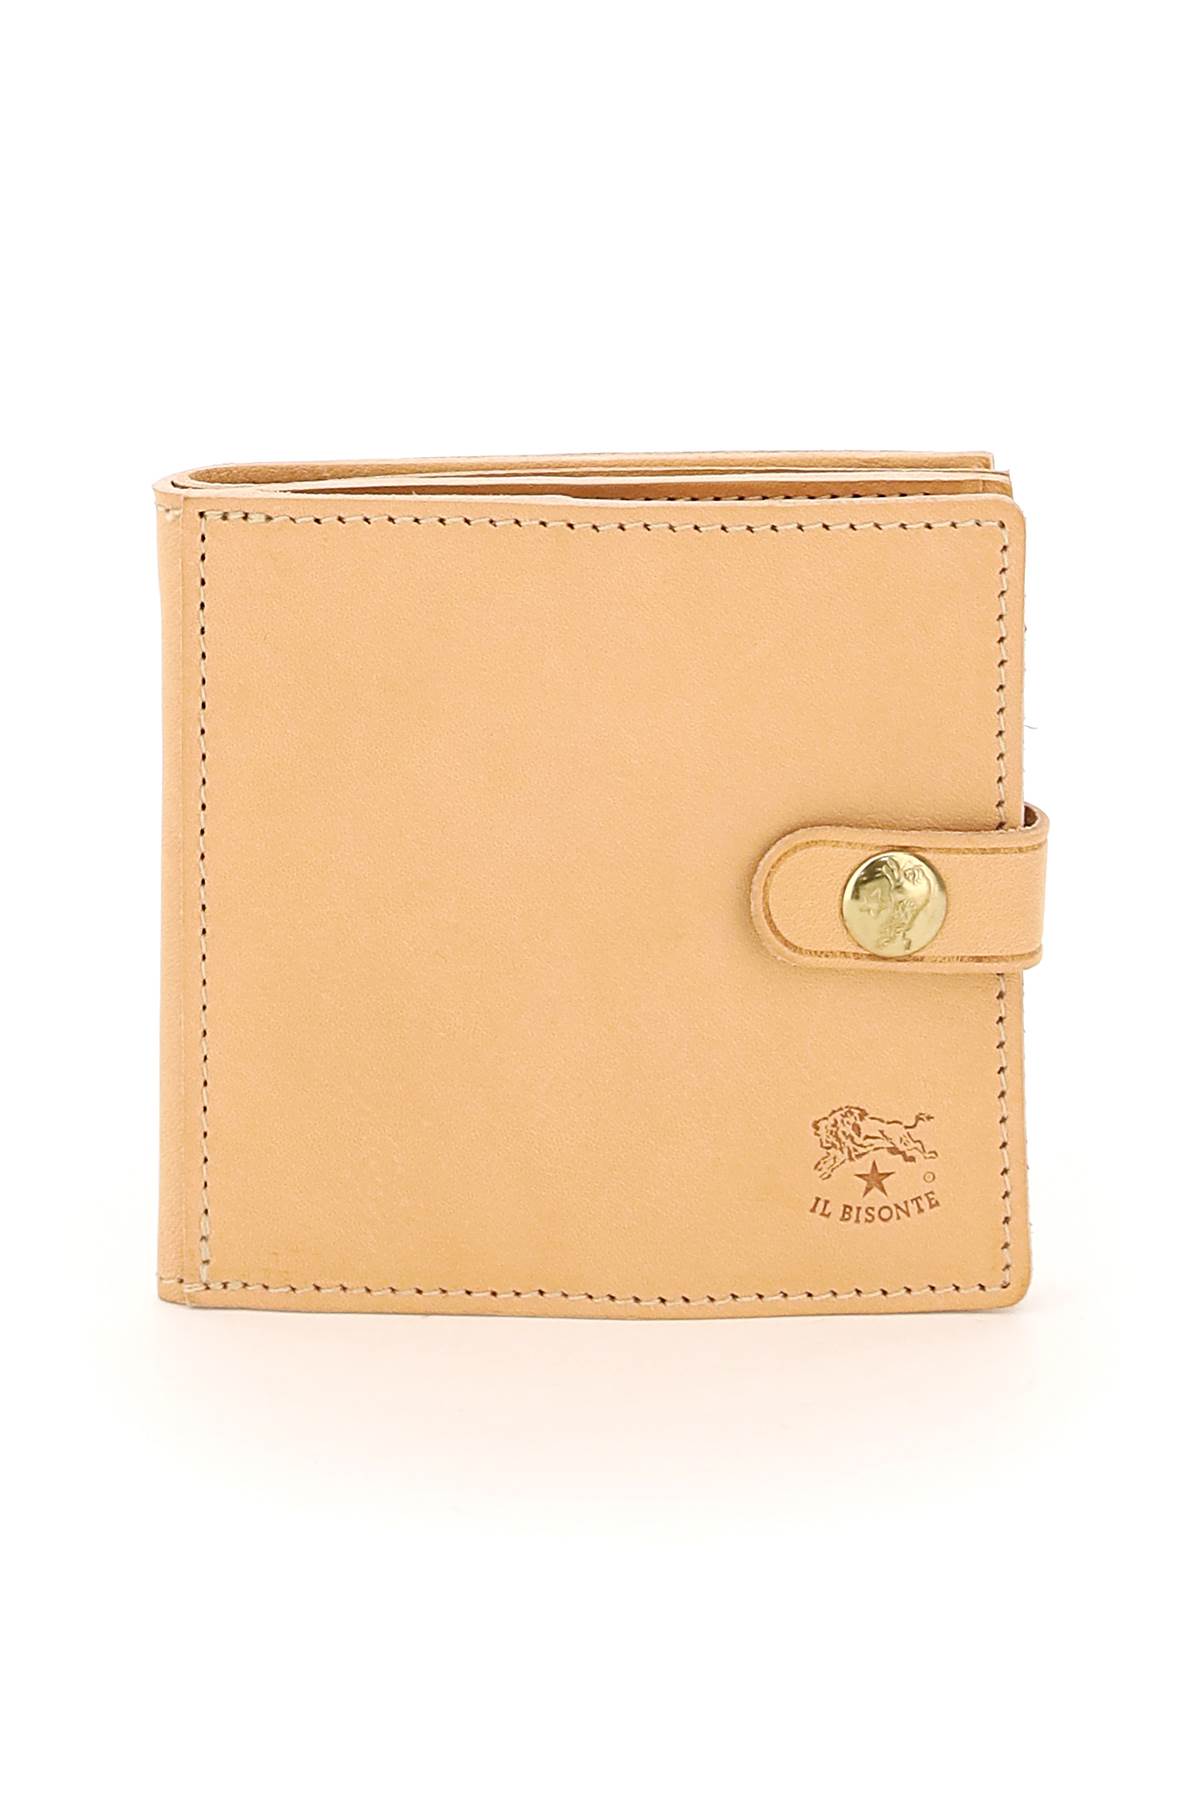 Il Bisonte Leather Bi-fold Wallet